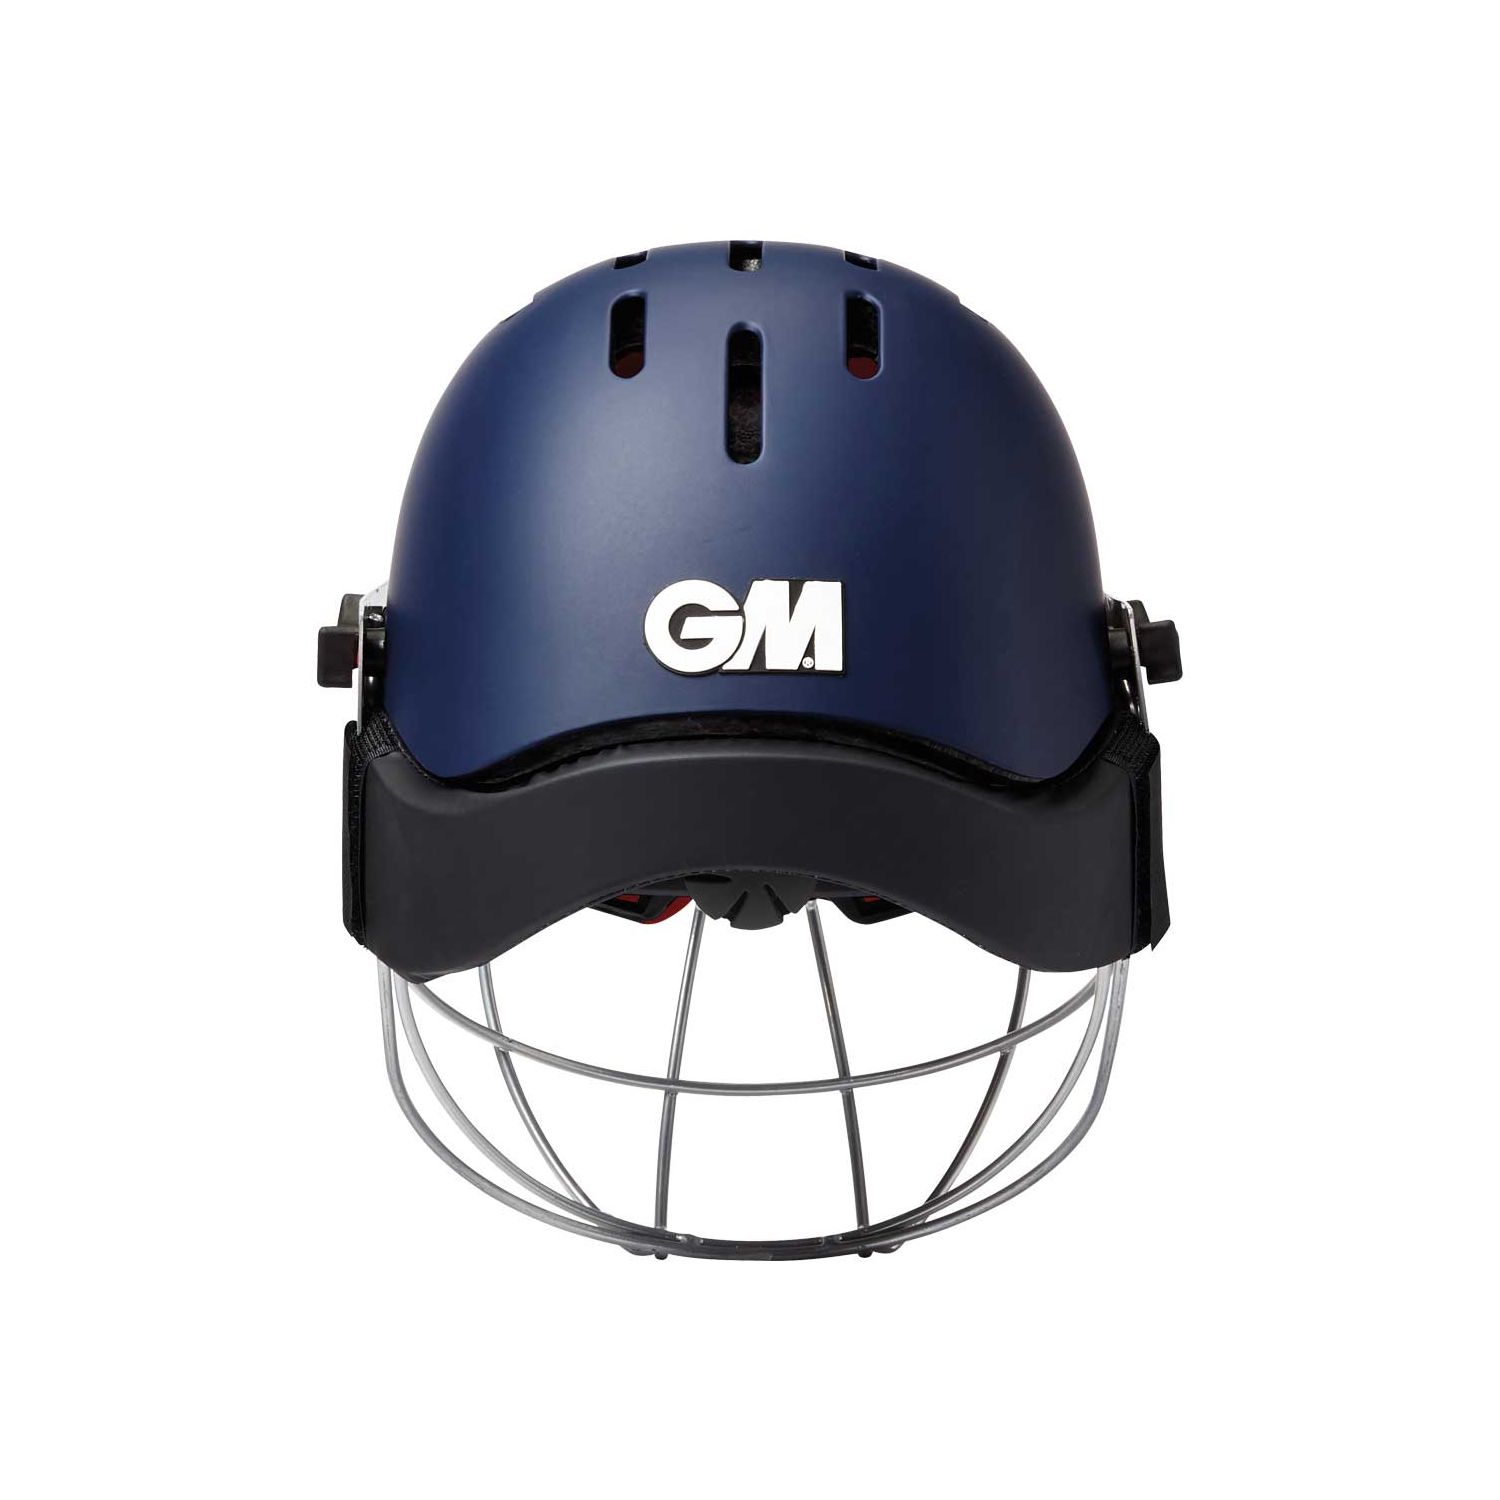 Purist Geo II Helmets